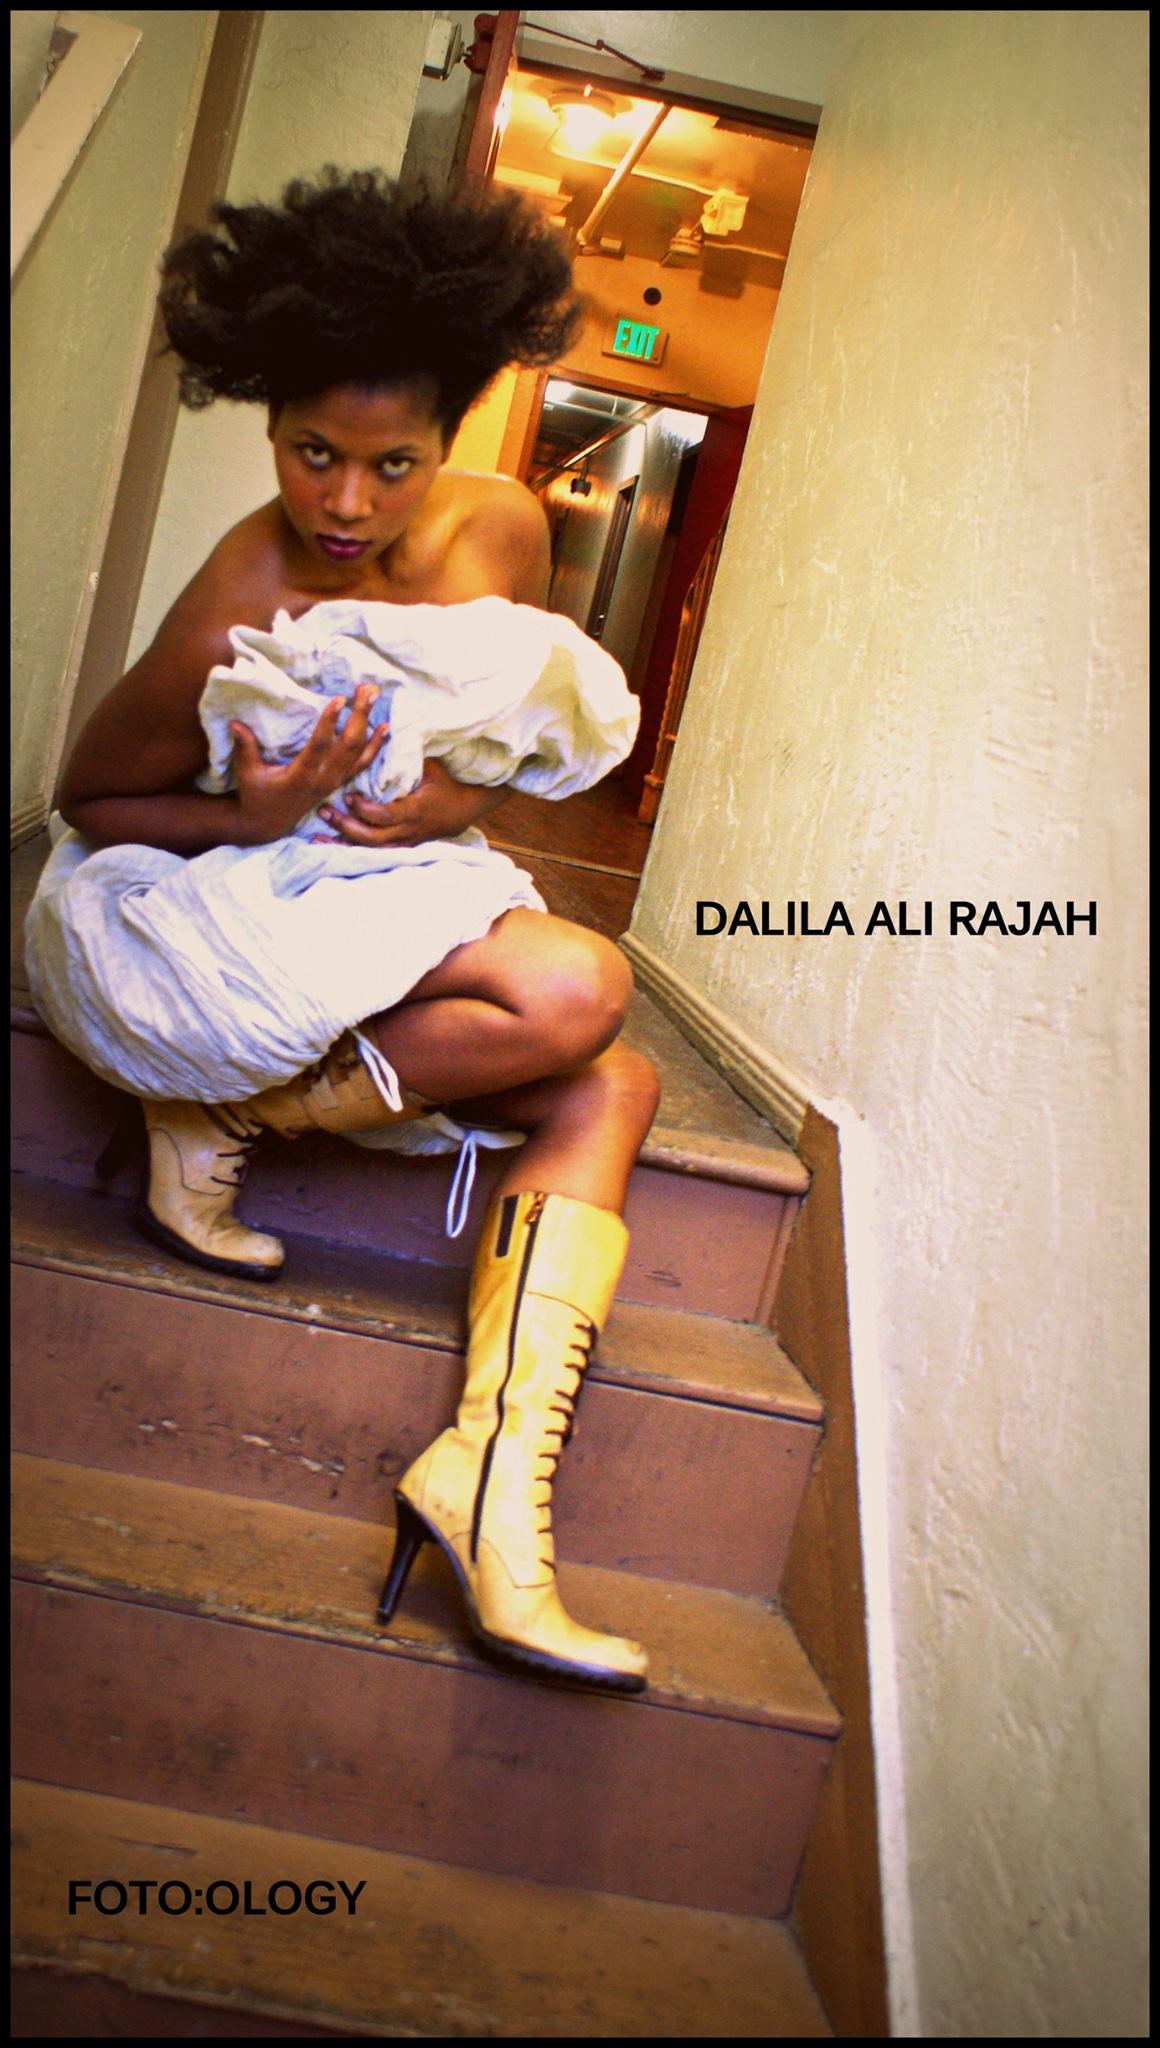 Dalila Ali Rajah